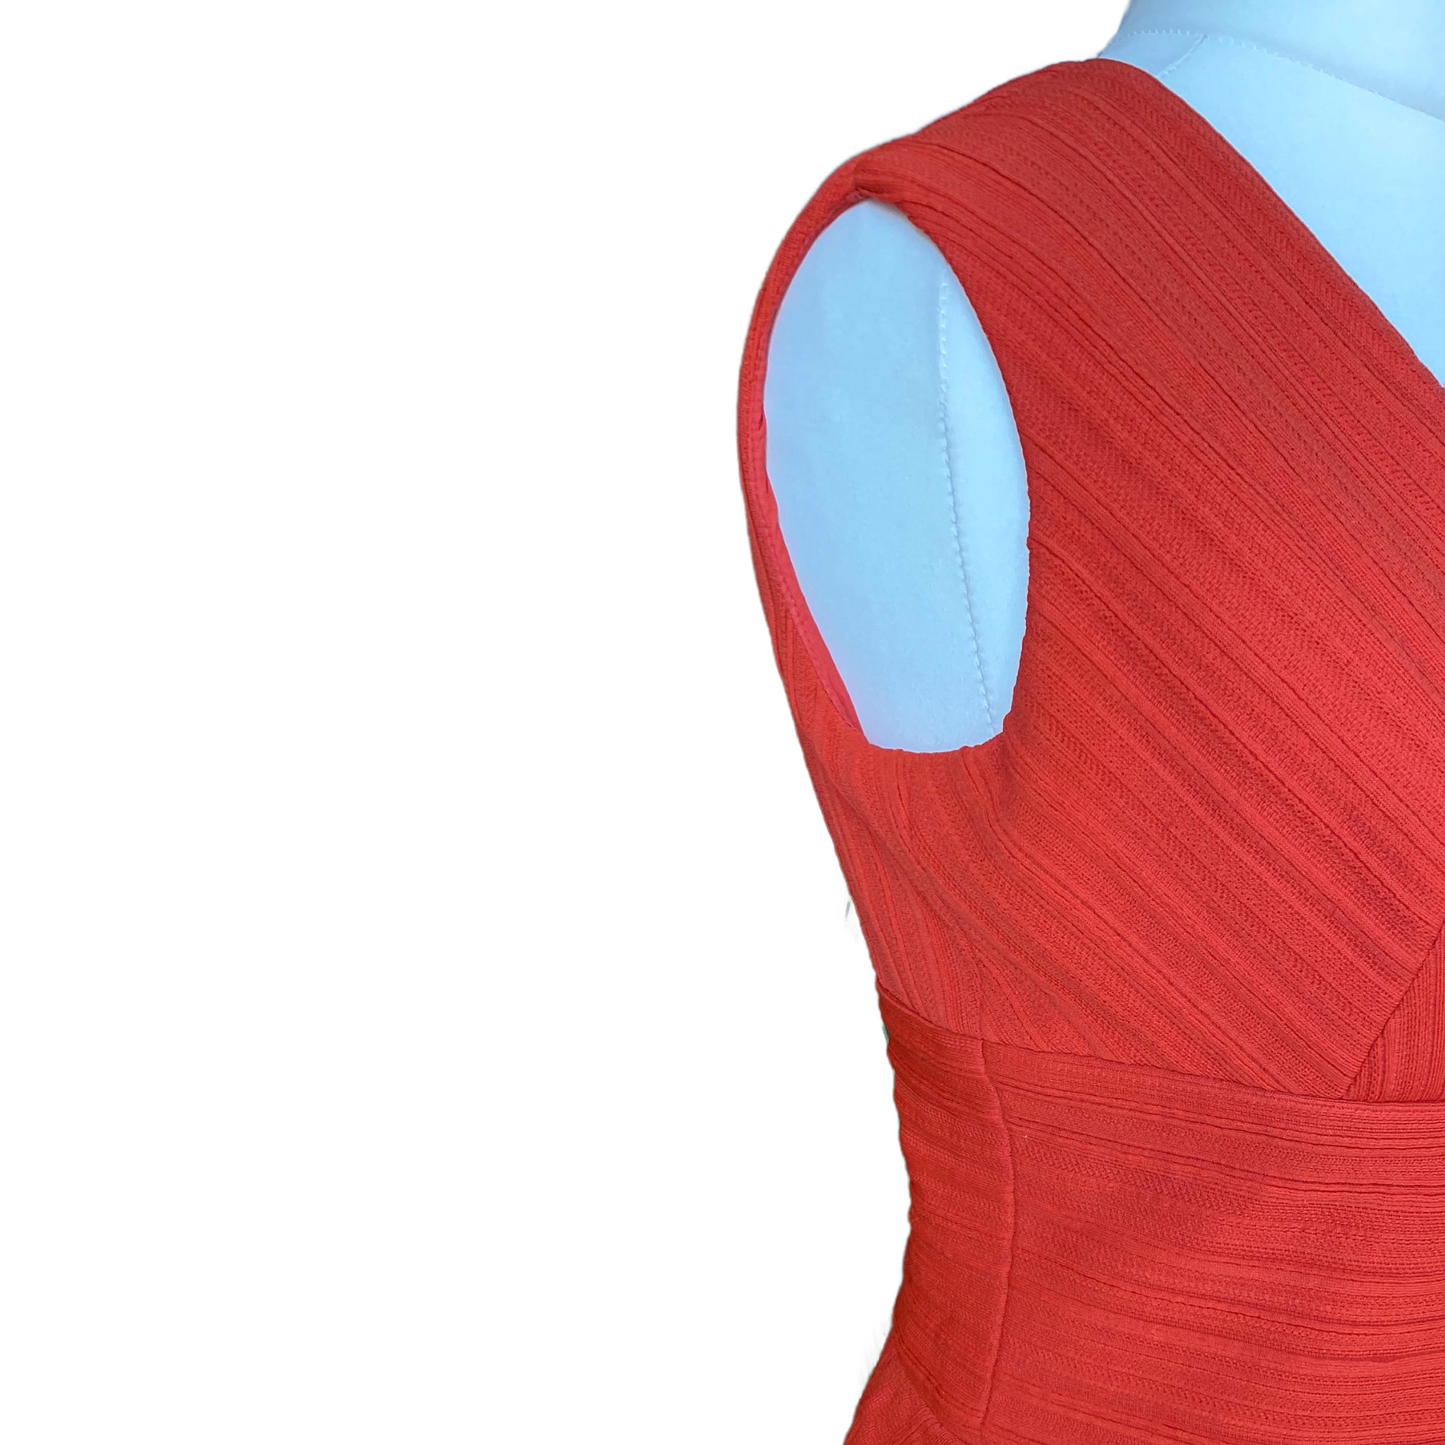 60s sleeveless red/ orange dress.  Approx UK size 14